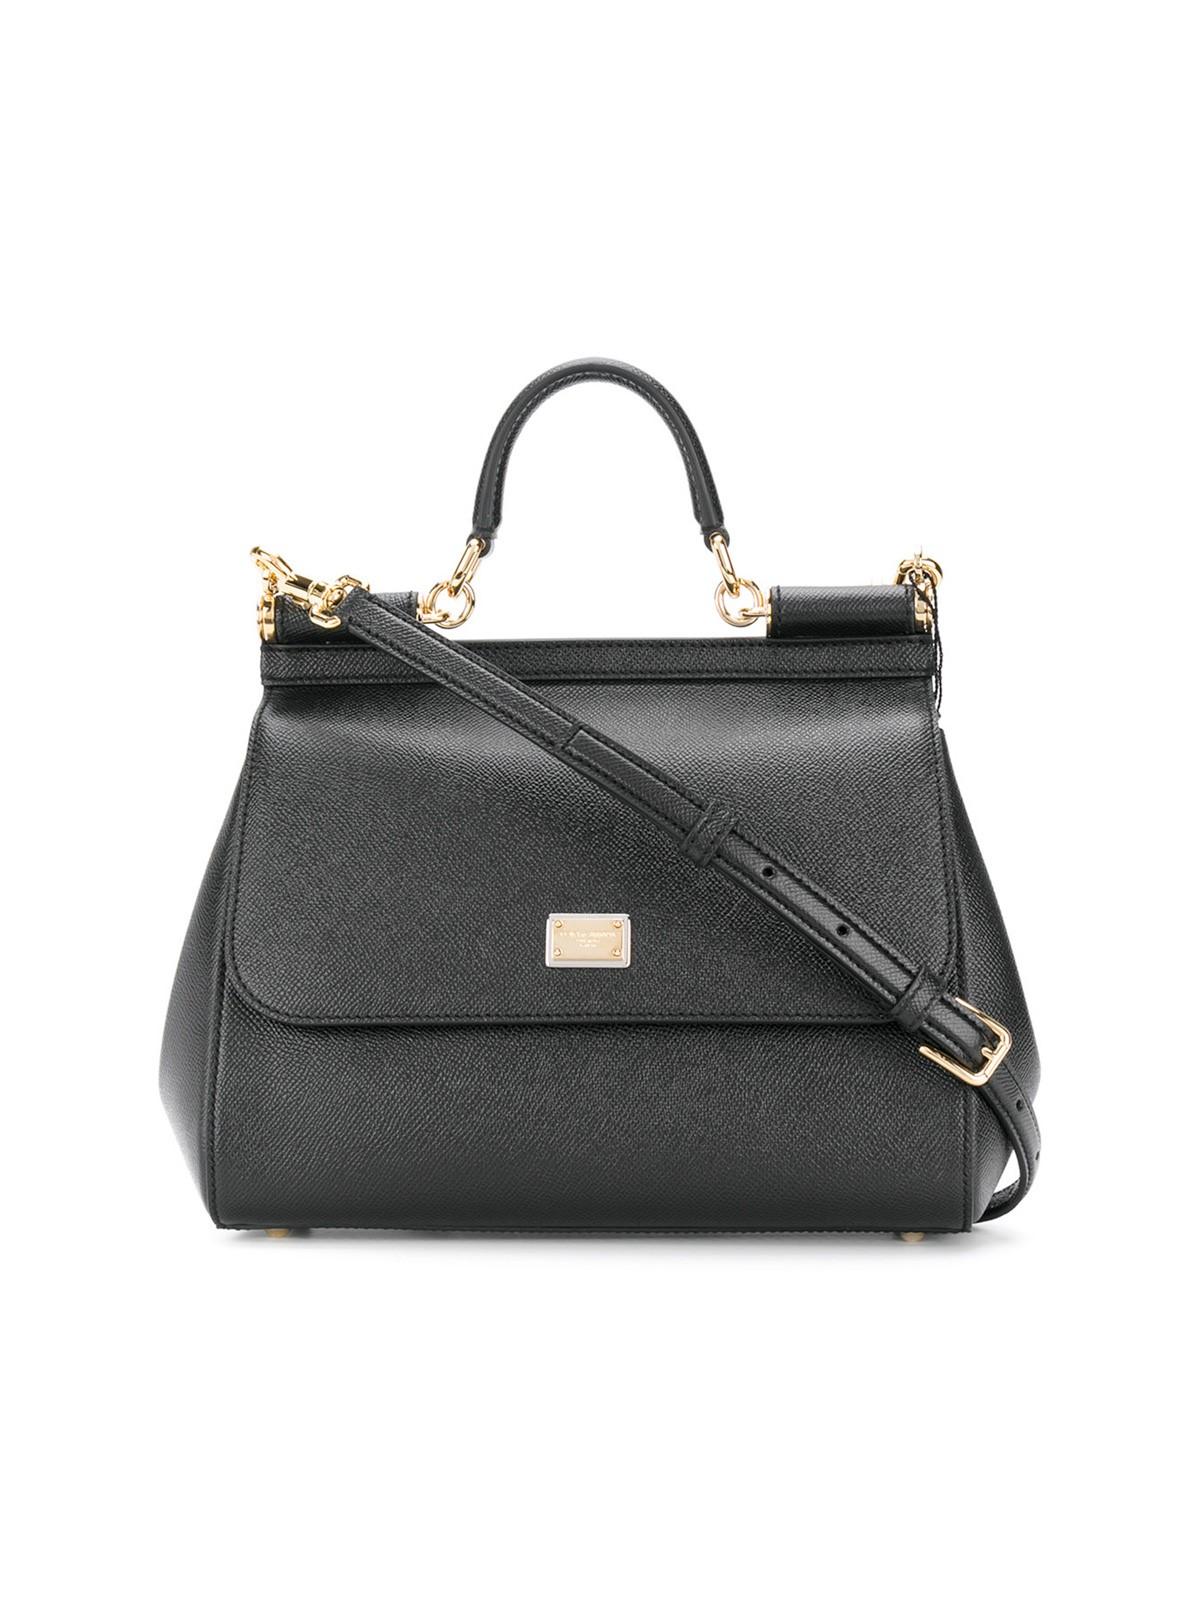 Dolce & Gabbana Sicily Bag Bags in Black | Lyst